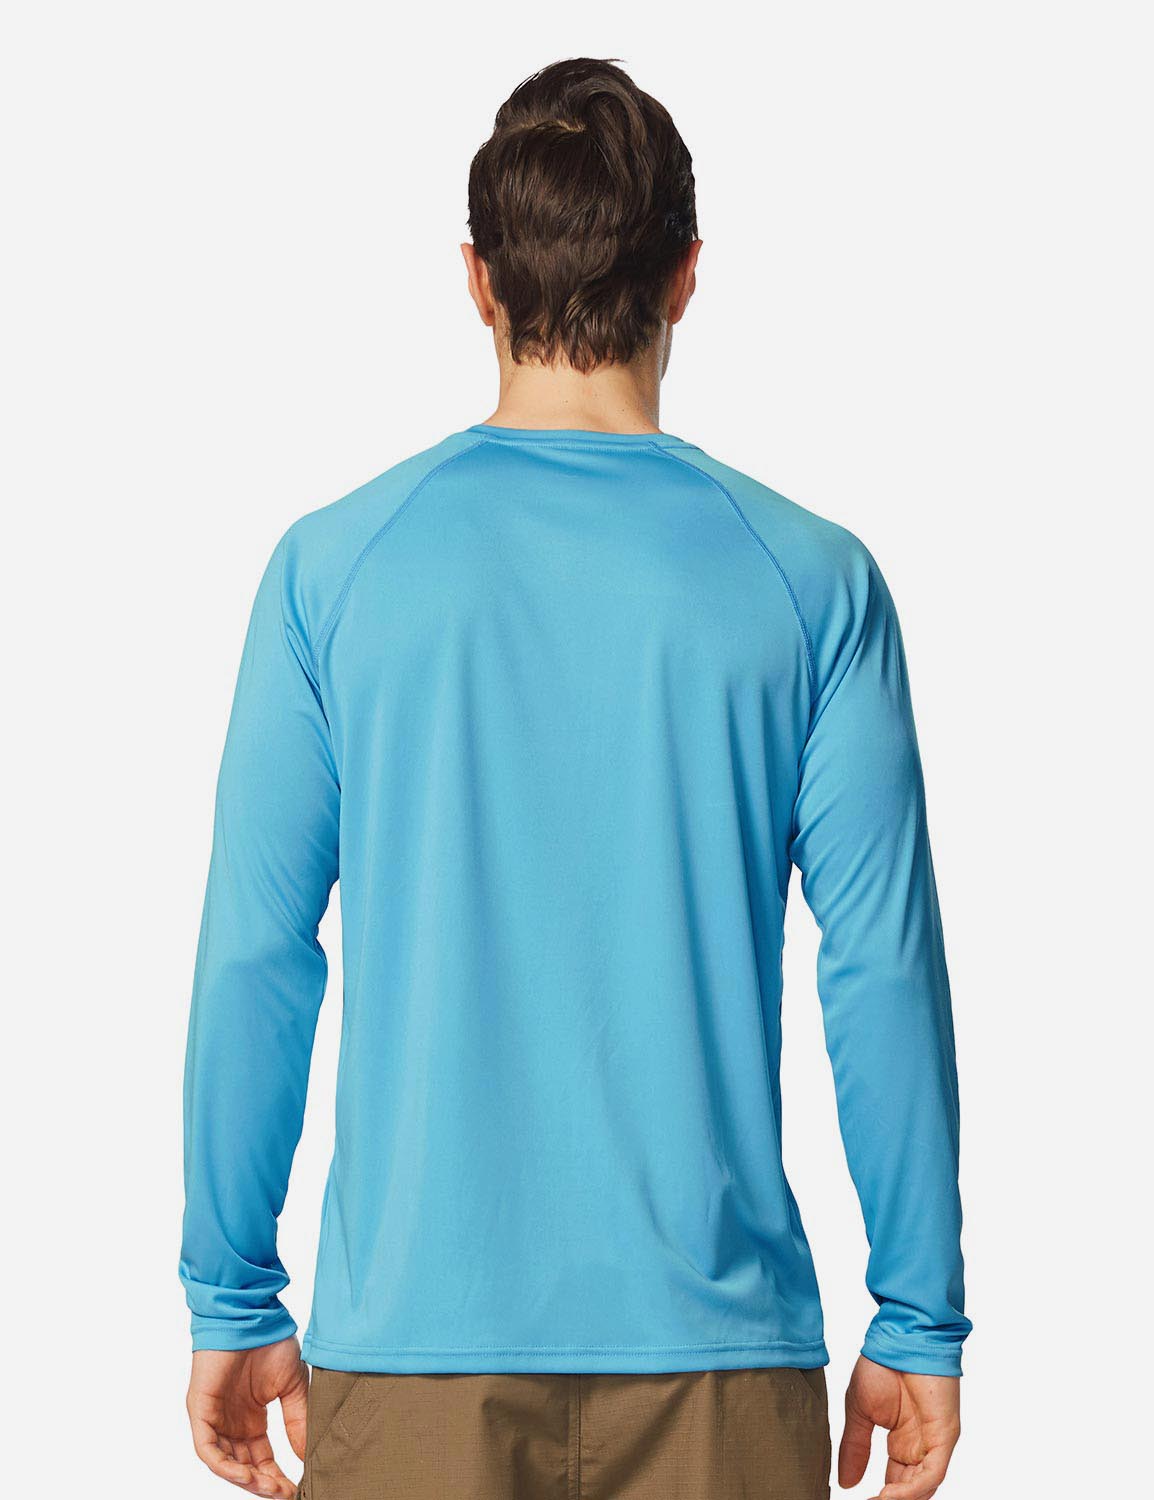 Baleaf Men's UPF 50+ Outdoor Running Long Sleeve T-Shirt Gray Size L